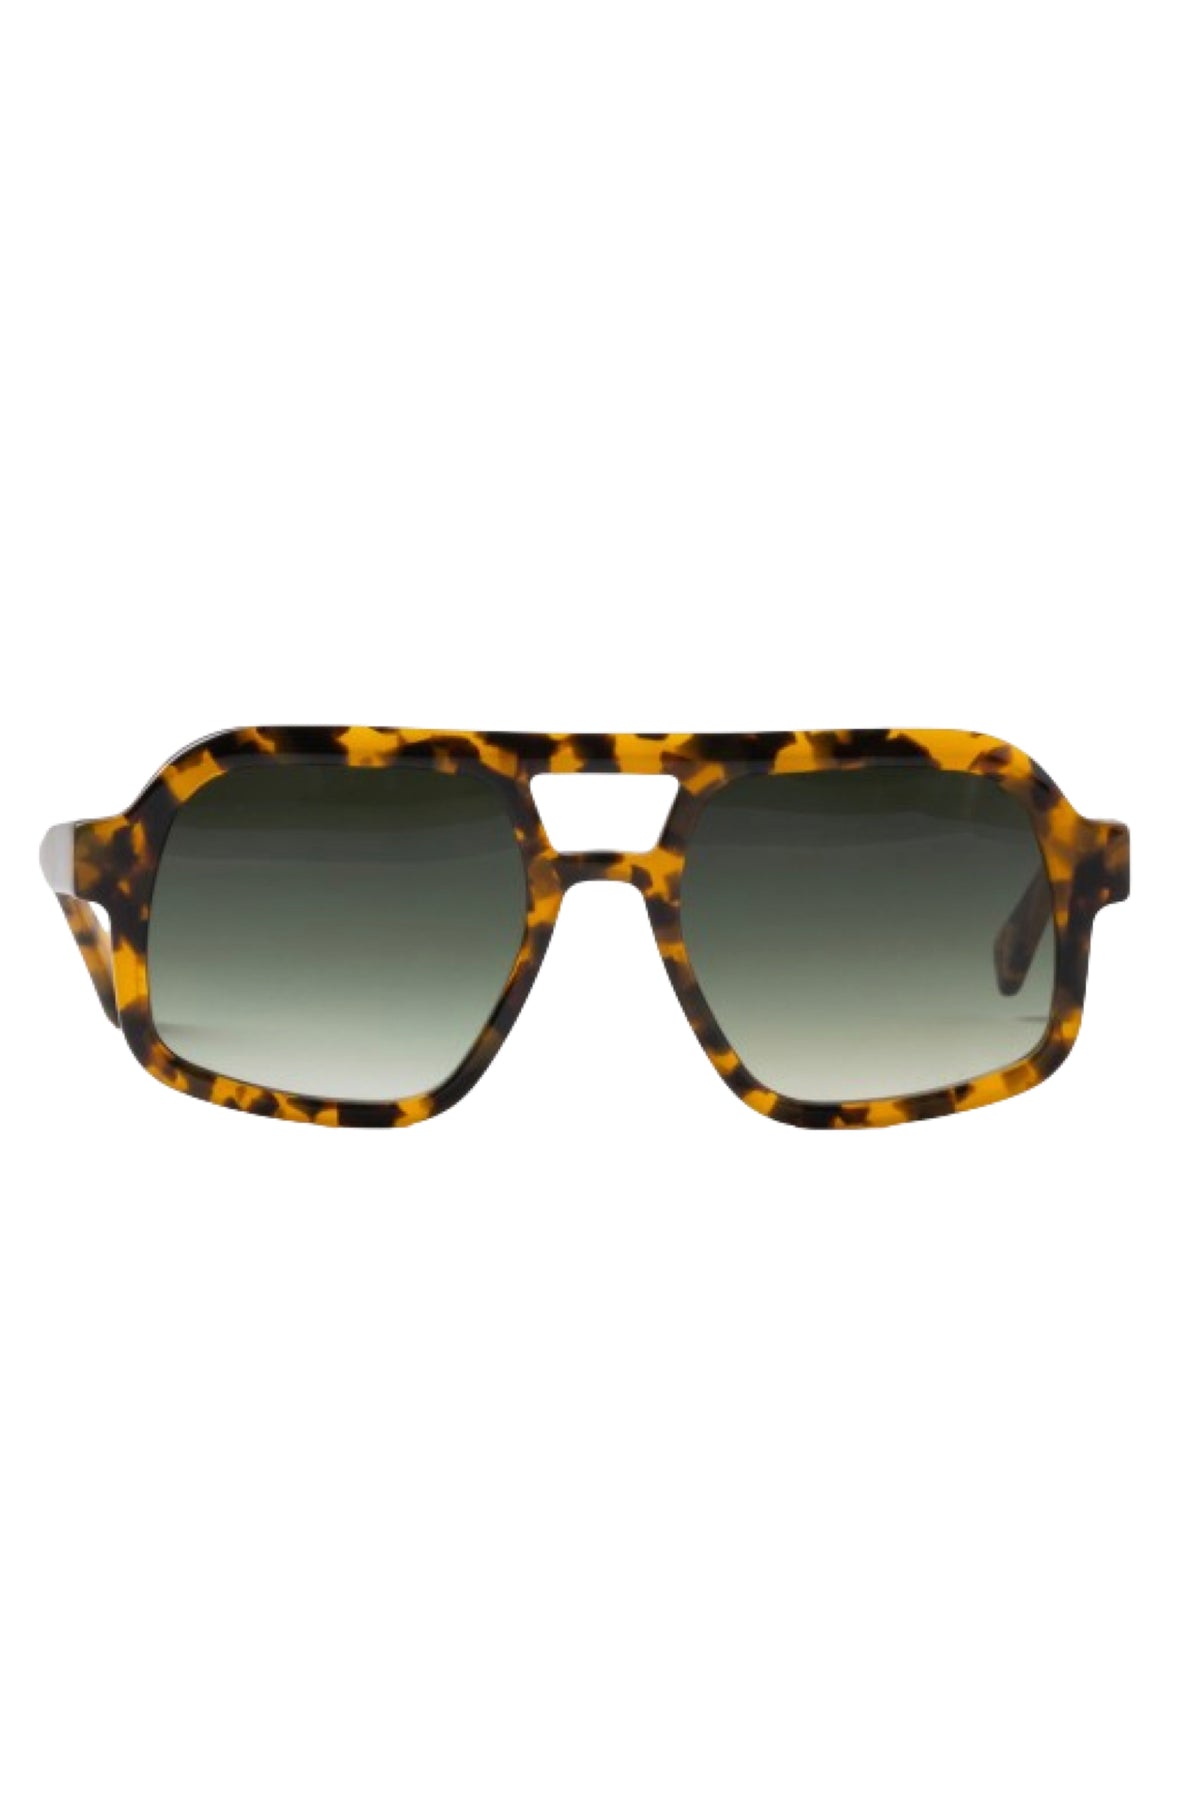 Candy Dust Tortoiseshell Sunglasses